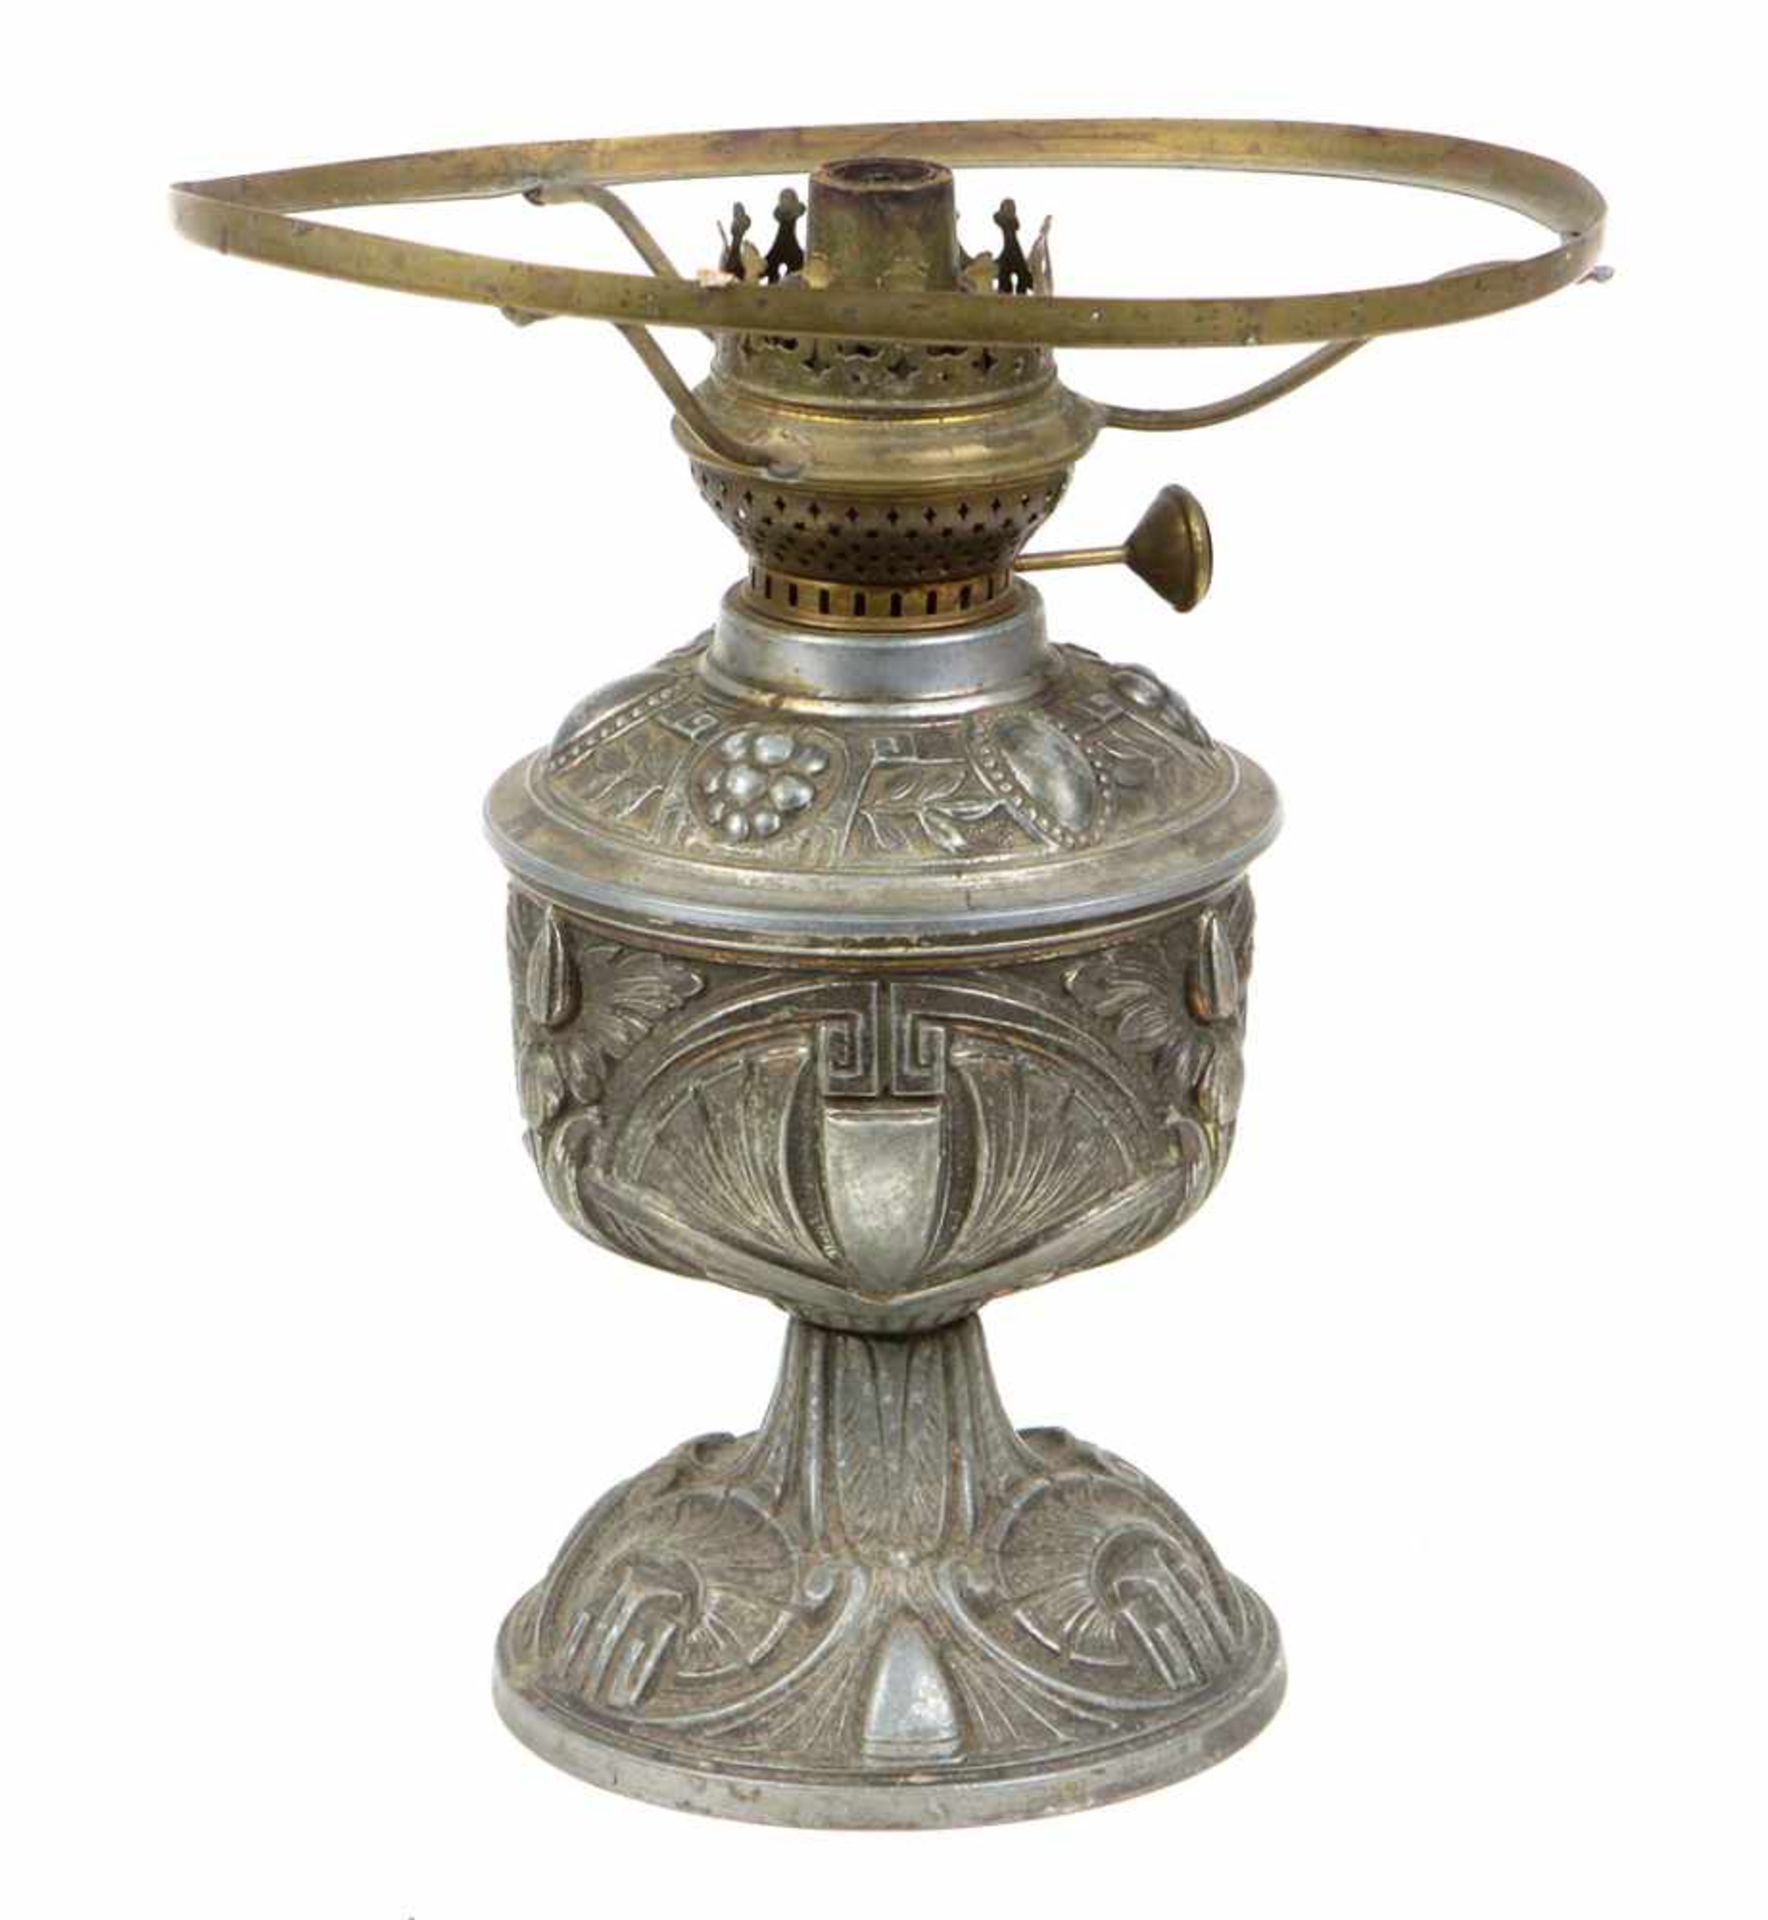 Jugendstil Petrolumlampe um 1900Zinkguß, zweiteiliger reich mit Jugendstil Ornamentik reliefierter